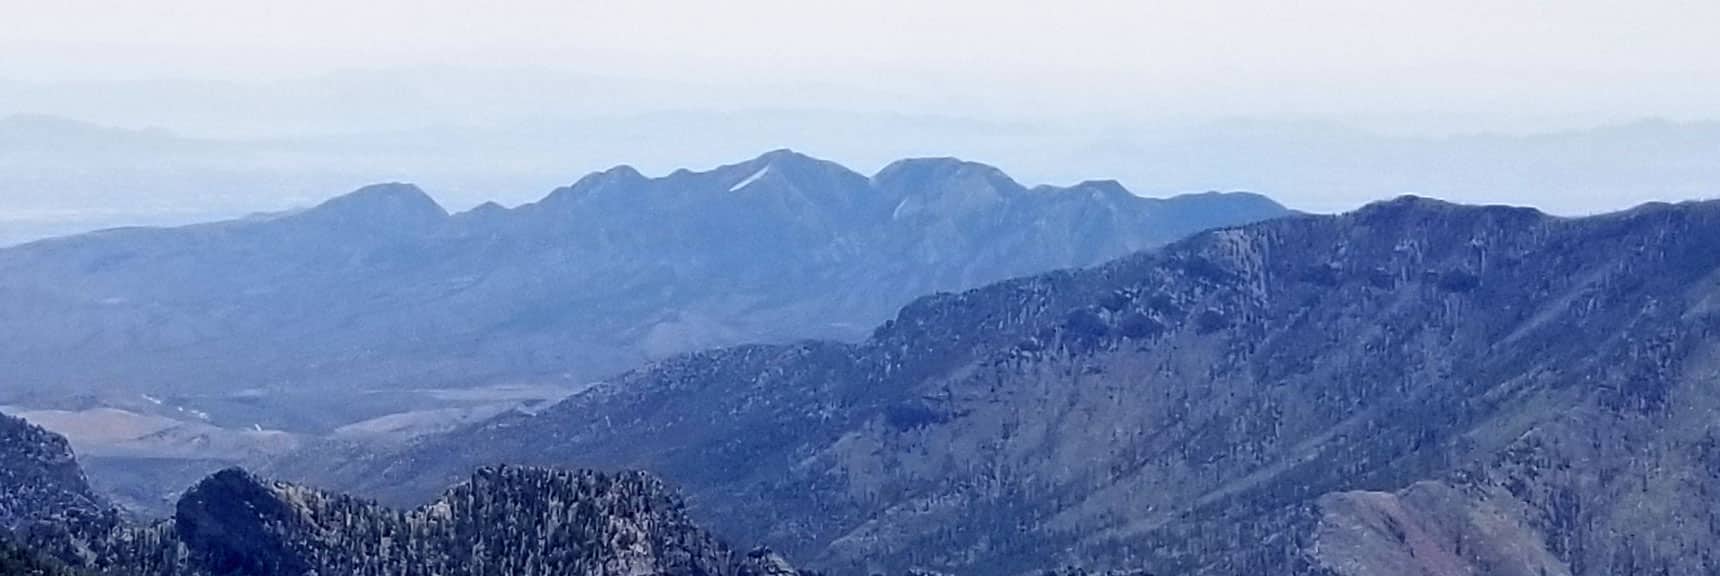 La Madre Mt. Viewed from Lee Peak Summit in Mt. Charleston Wilderness, Nevada